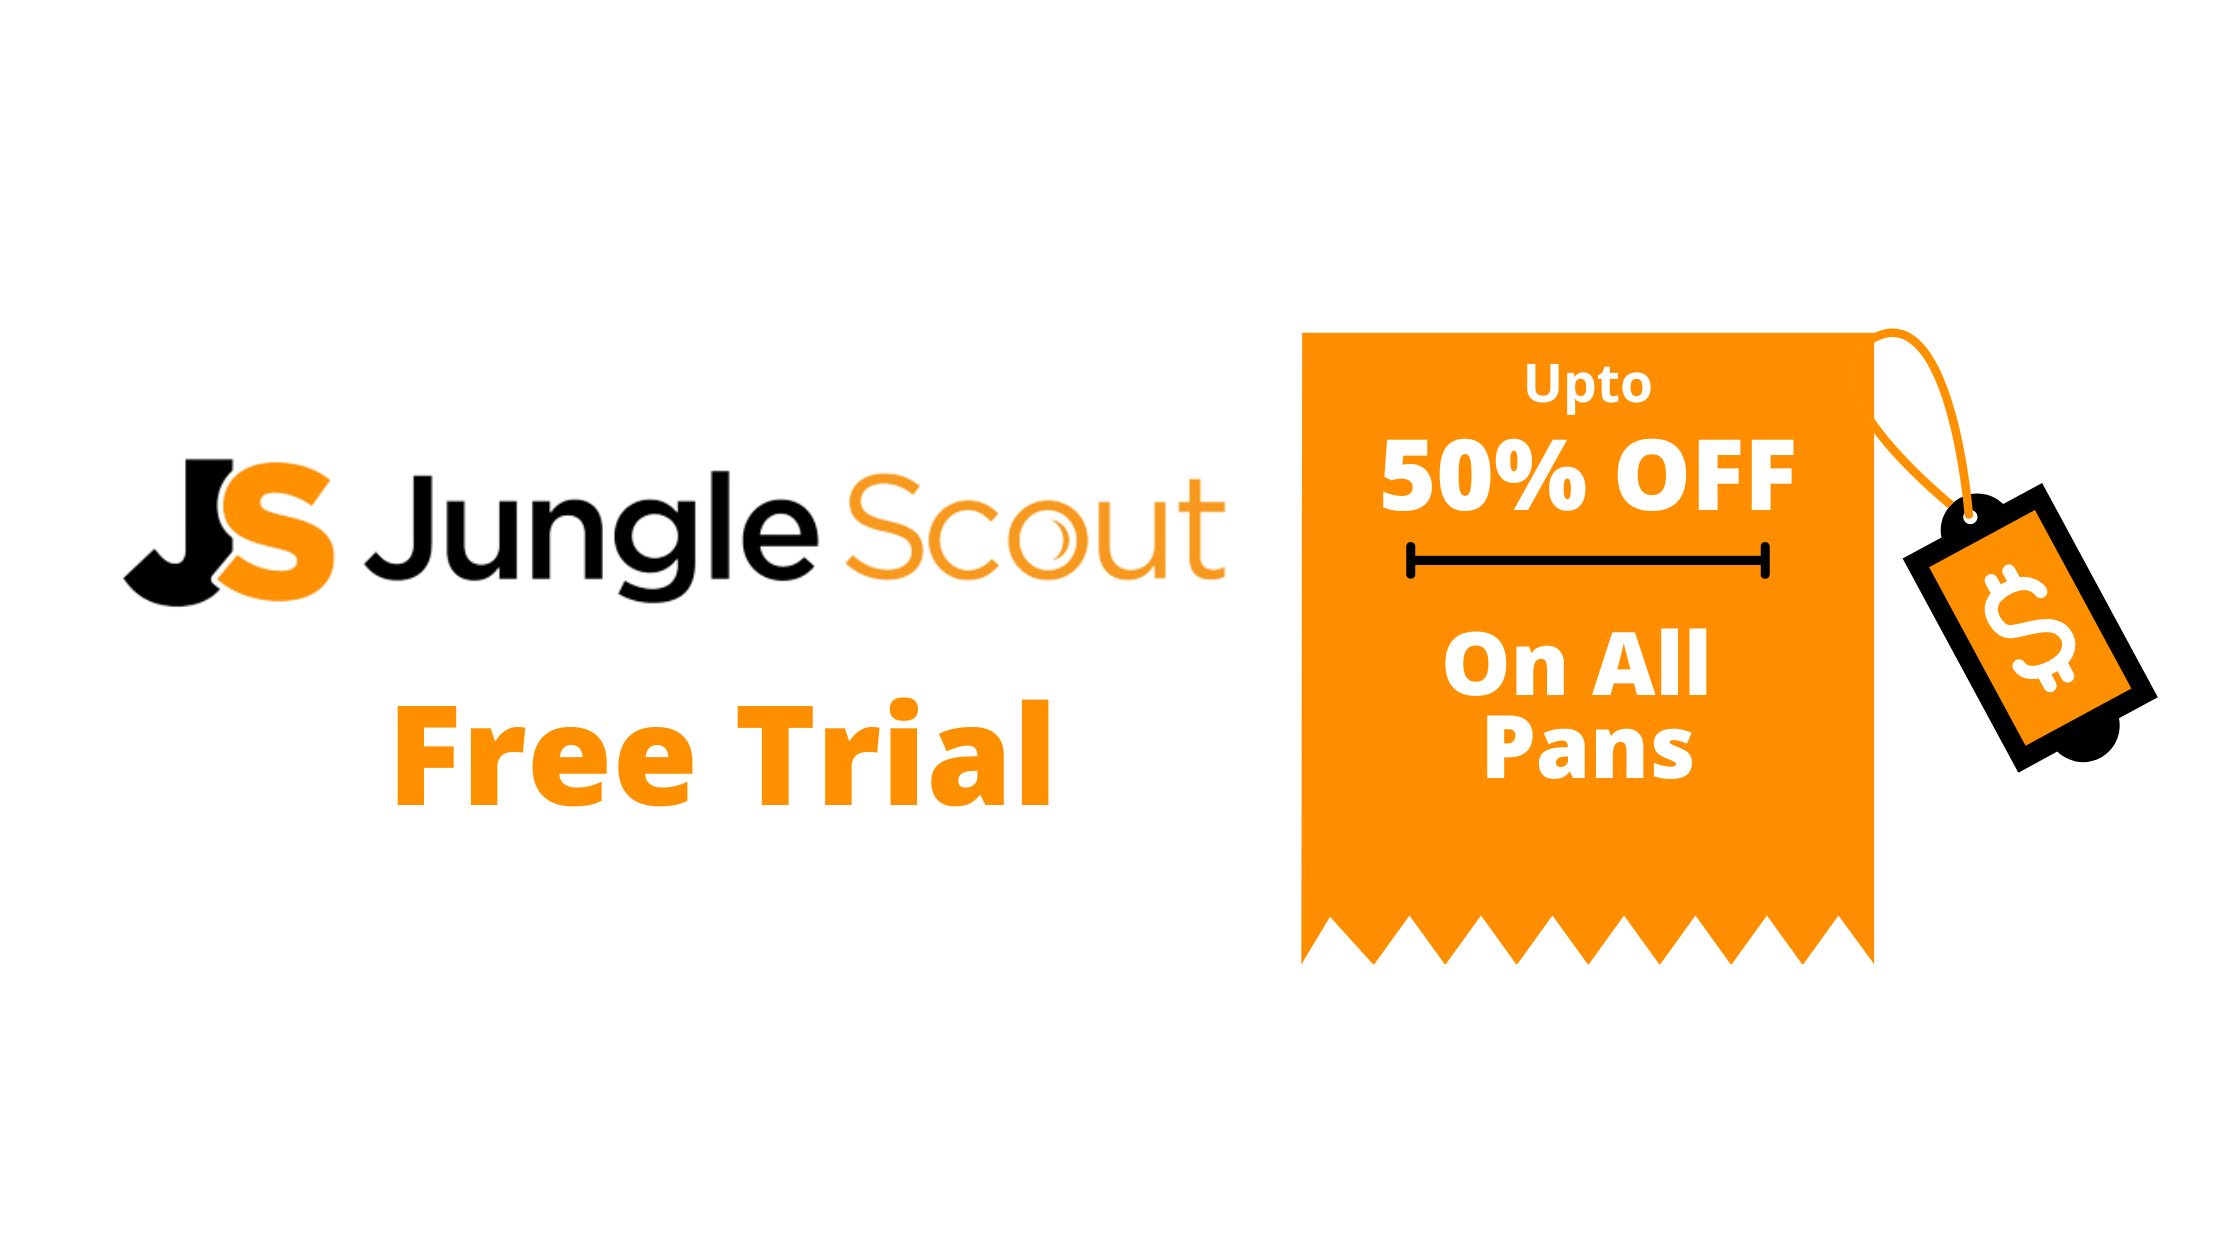 Jungle Scout Free Trial